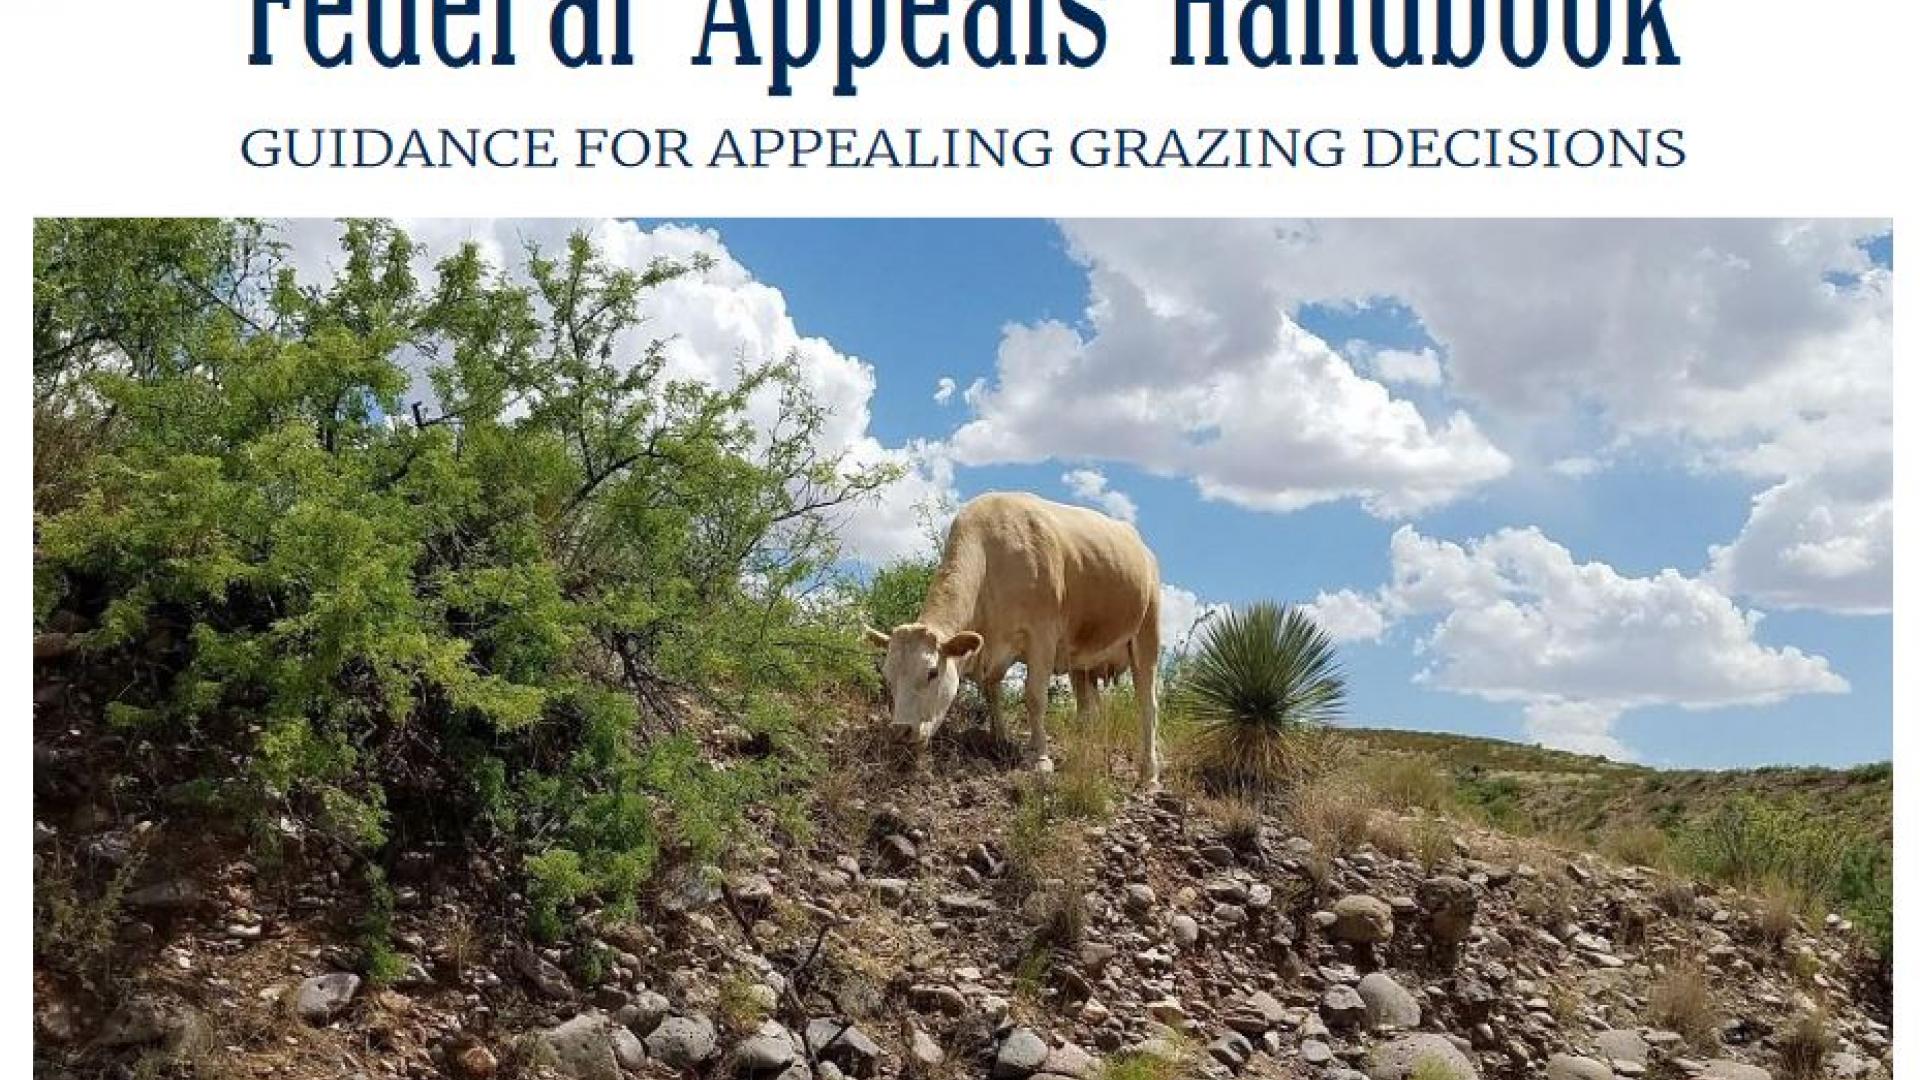 Cover of Federal Appeals Handbook